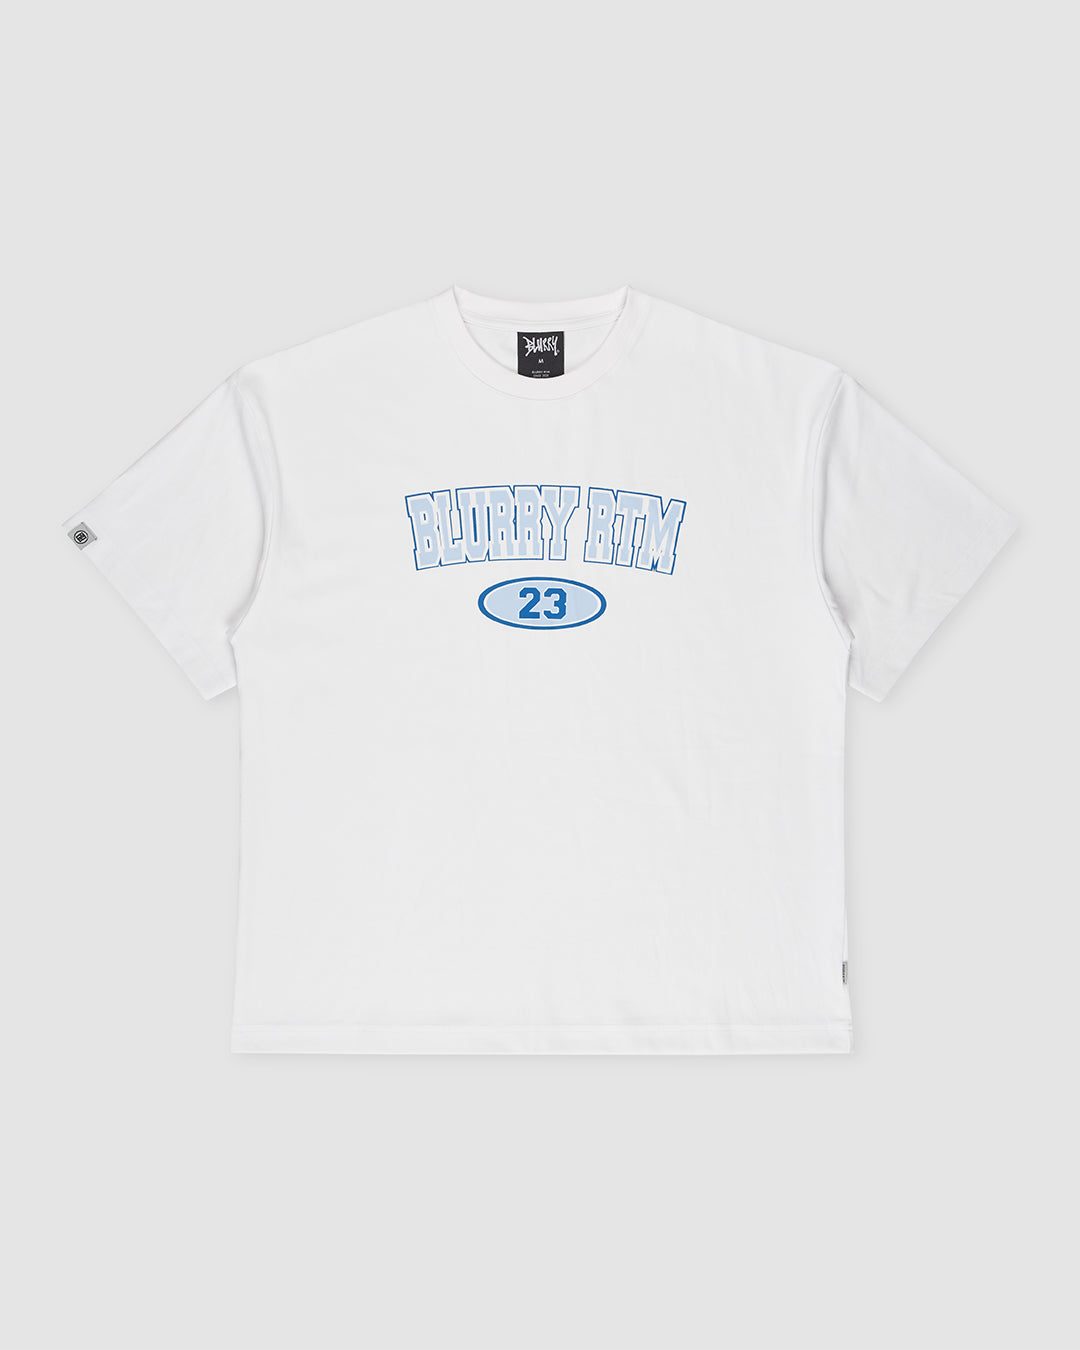 BLURRY RTM 23 T-Shirt (Daisy White/Blue)